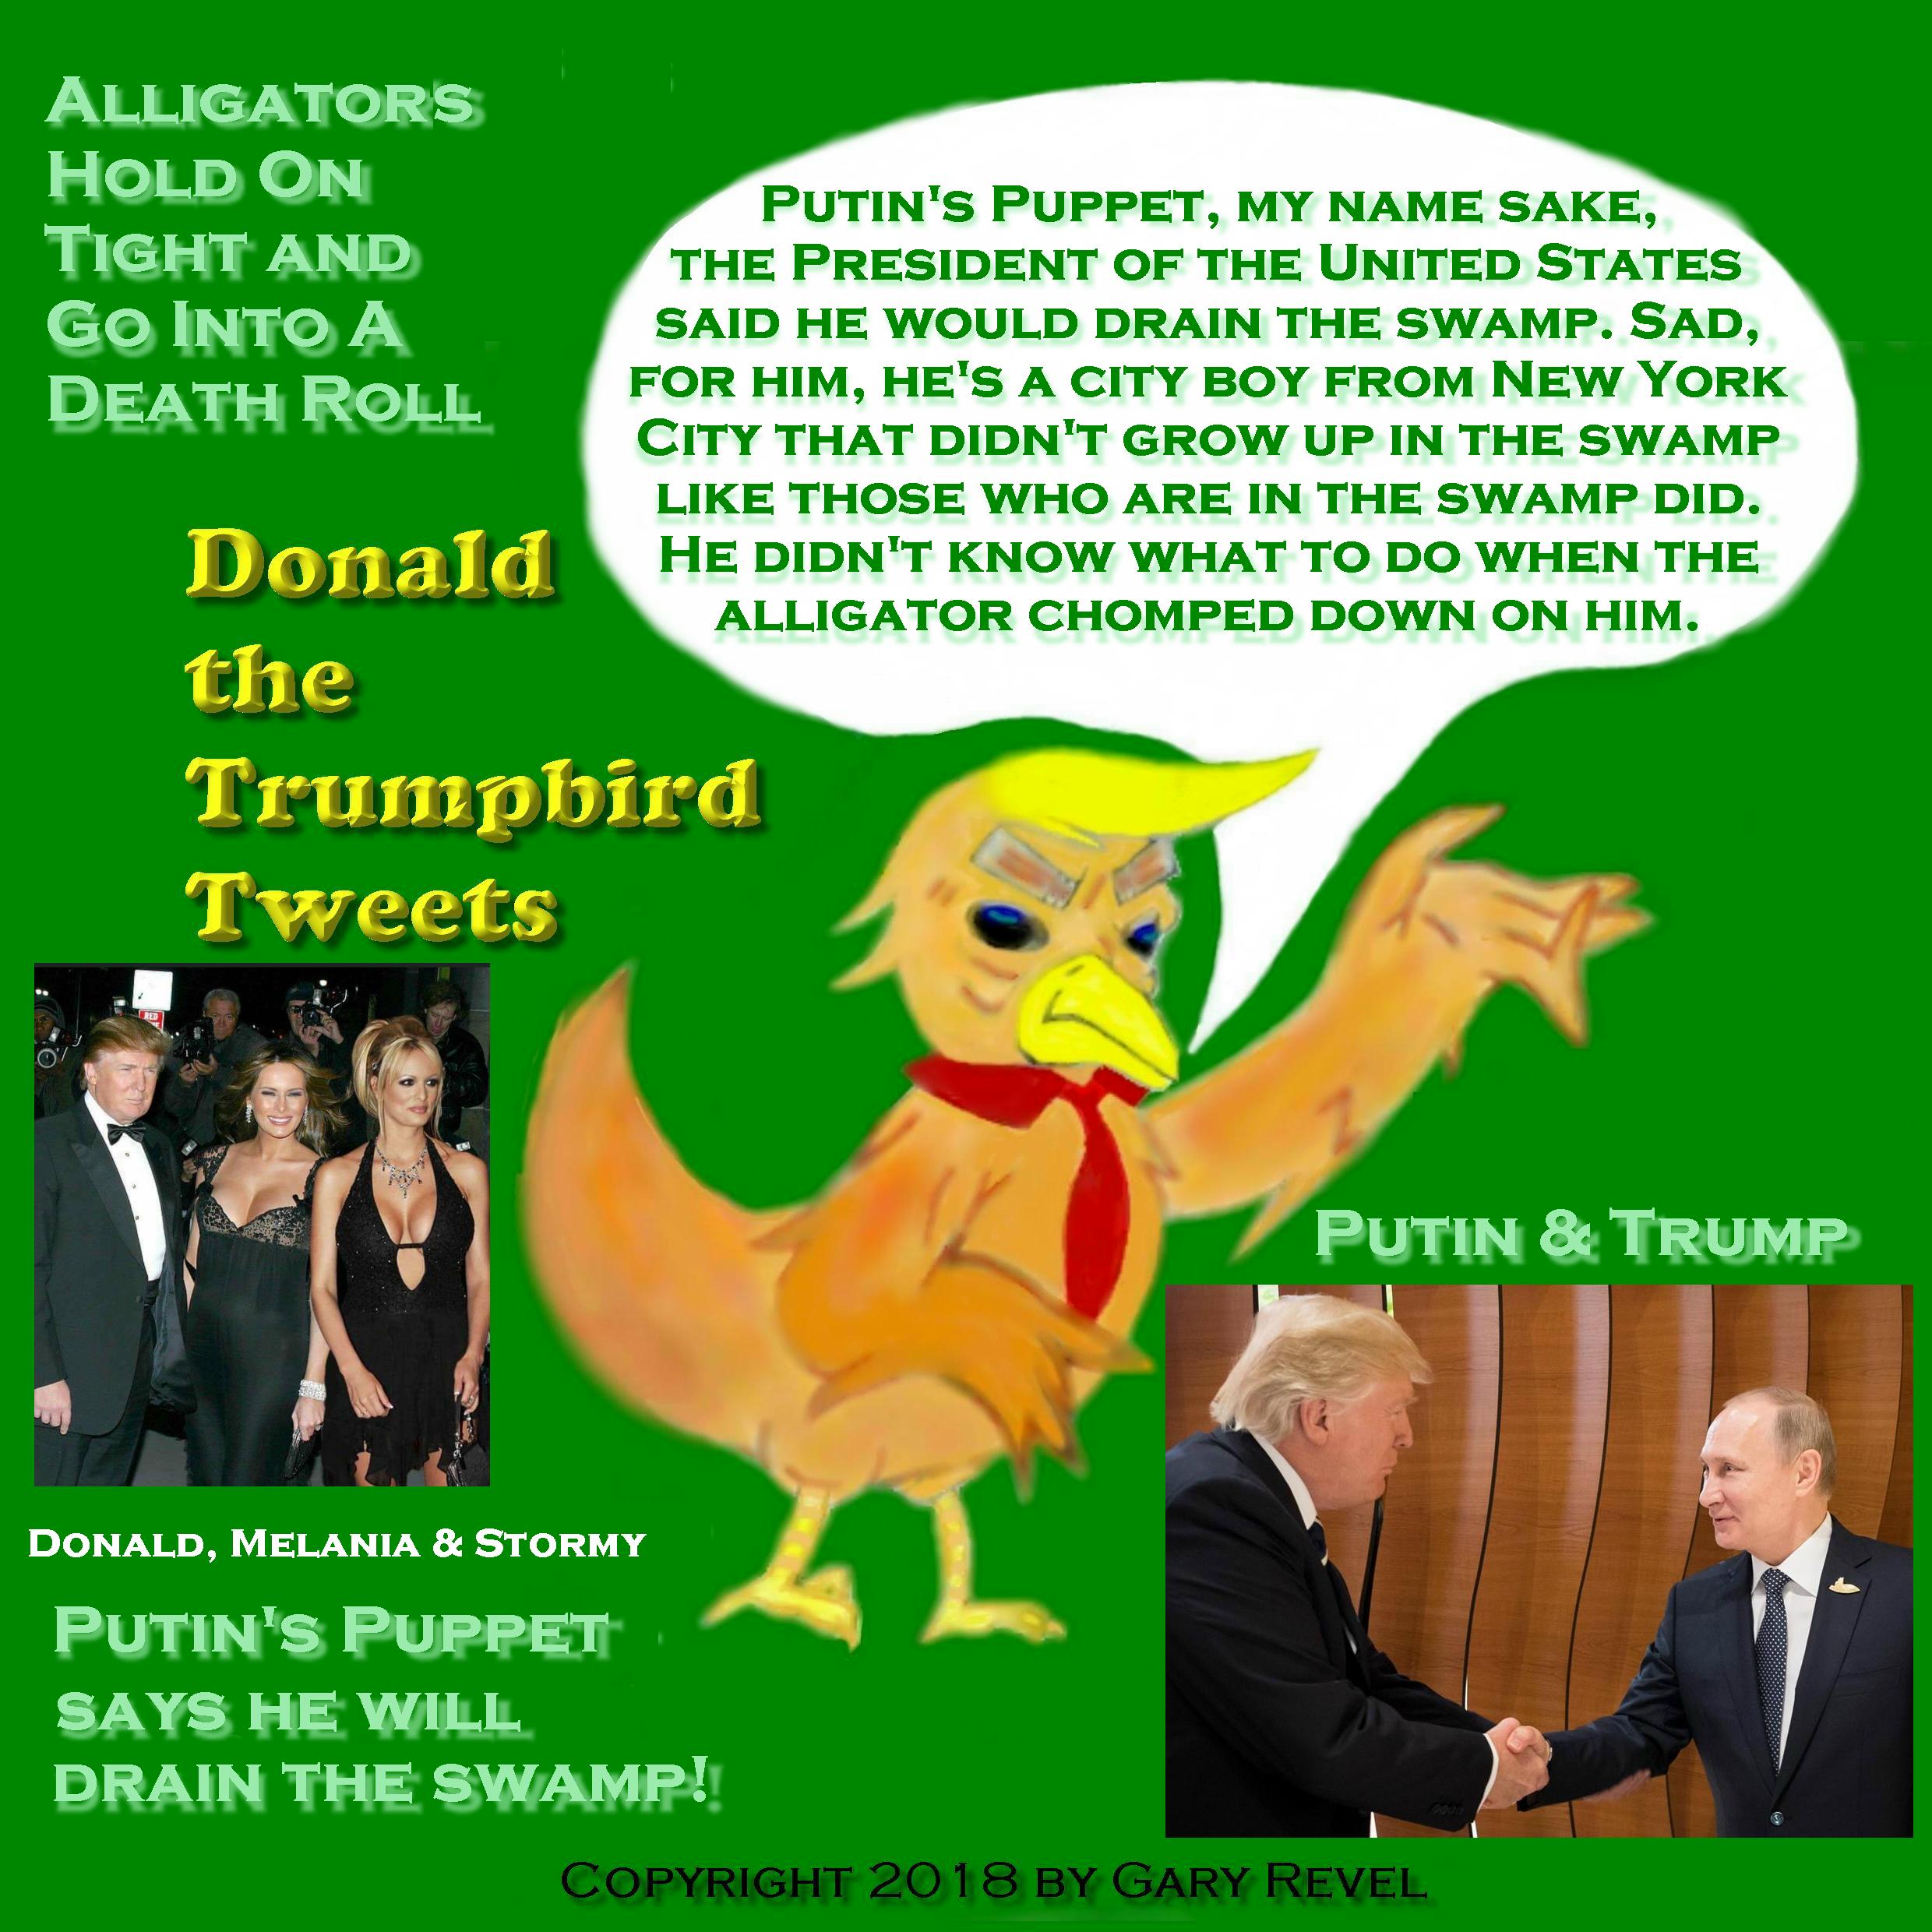 Donald the Trumpbird tweets Putin's Puppet Trump drain the swamp